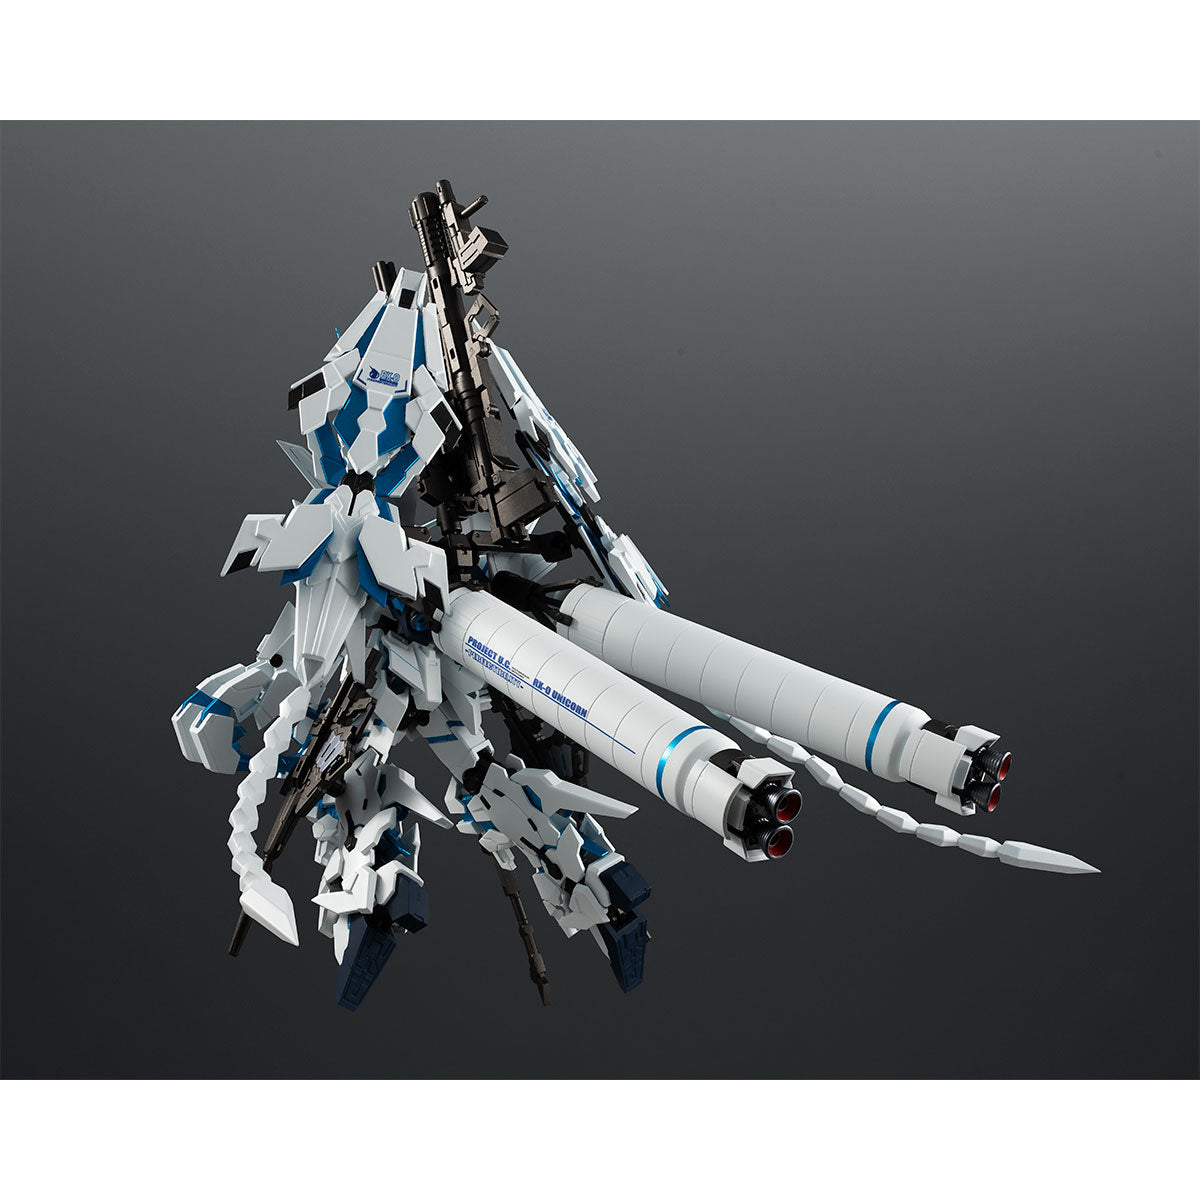 Robot Spirit - SIDE MS - RX-0 Unicorn Gundam Perfectability Devine